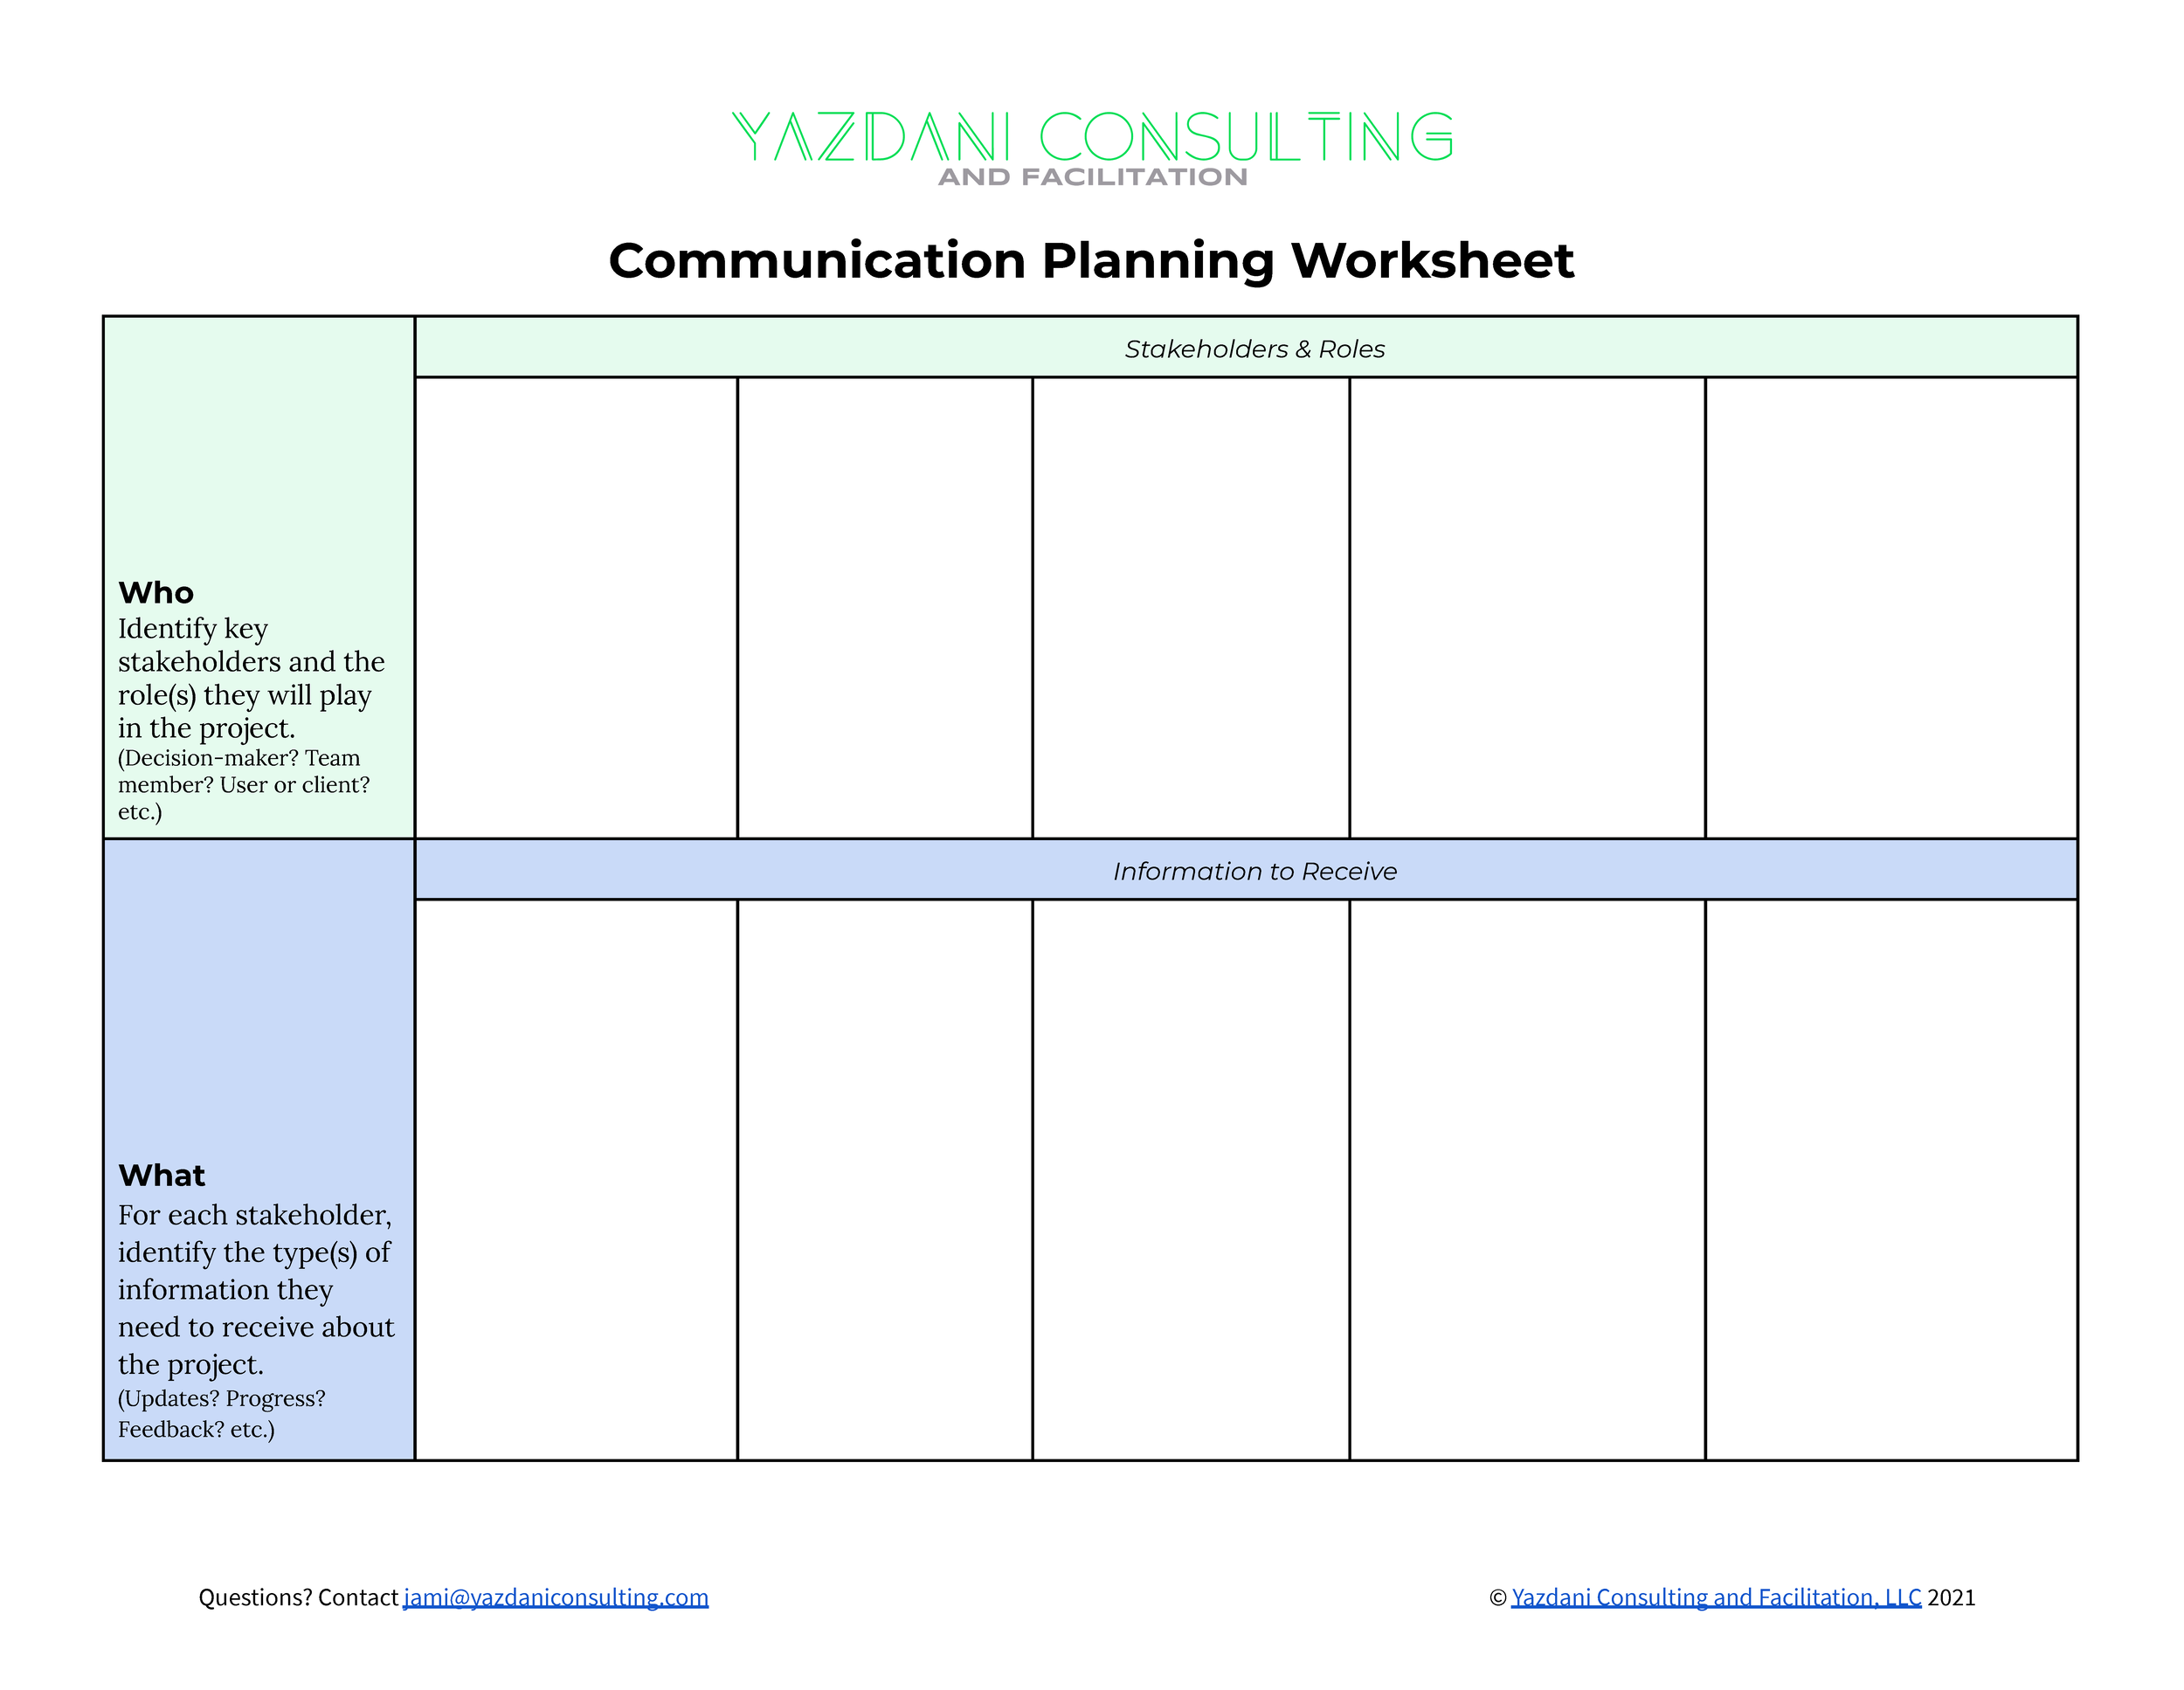 Communication Planning Worksheet_Page_1.png